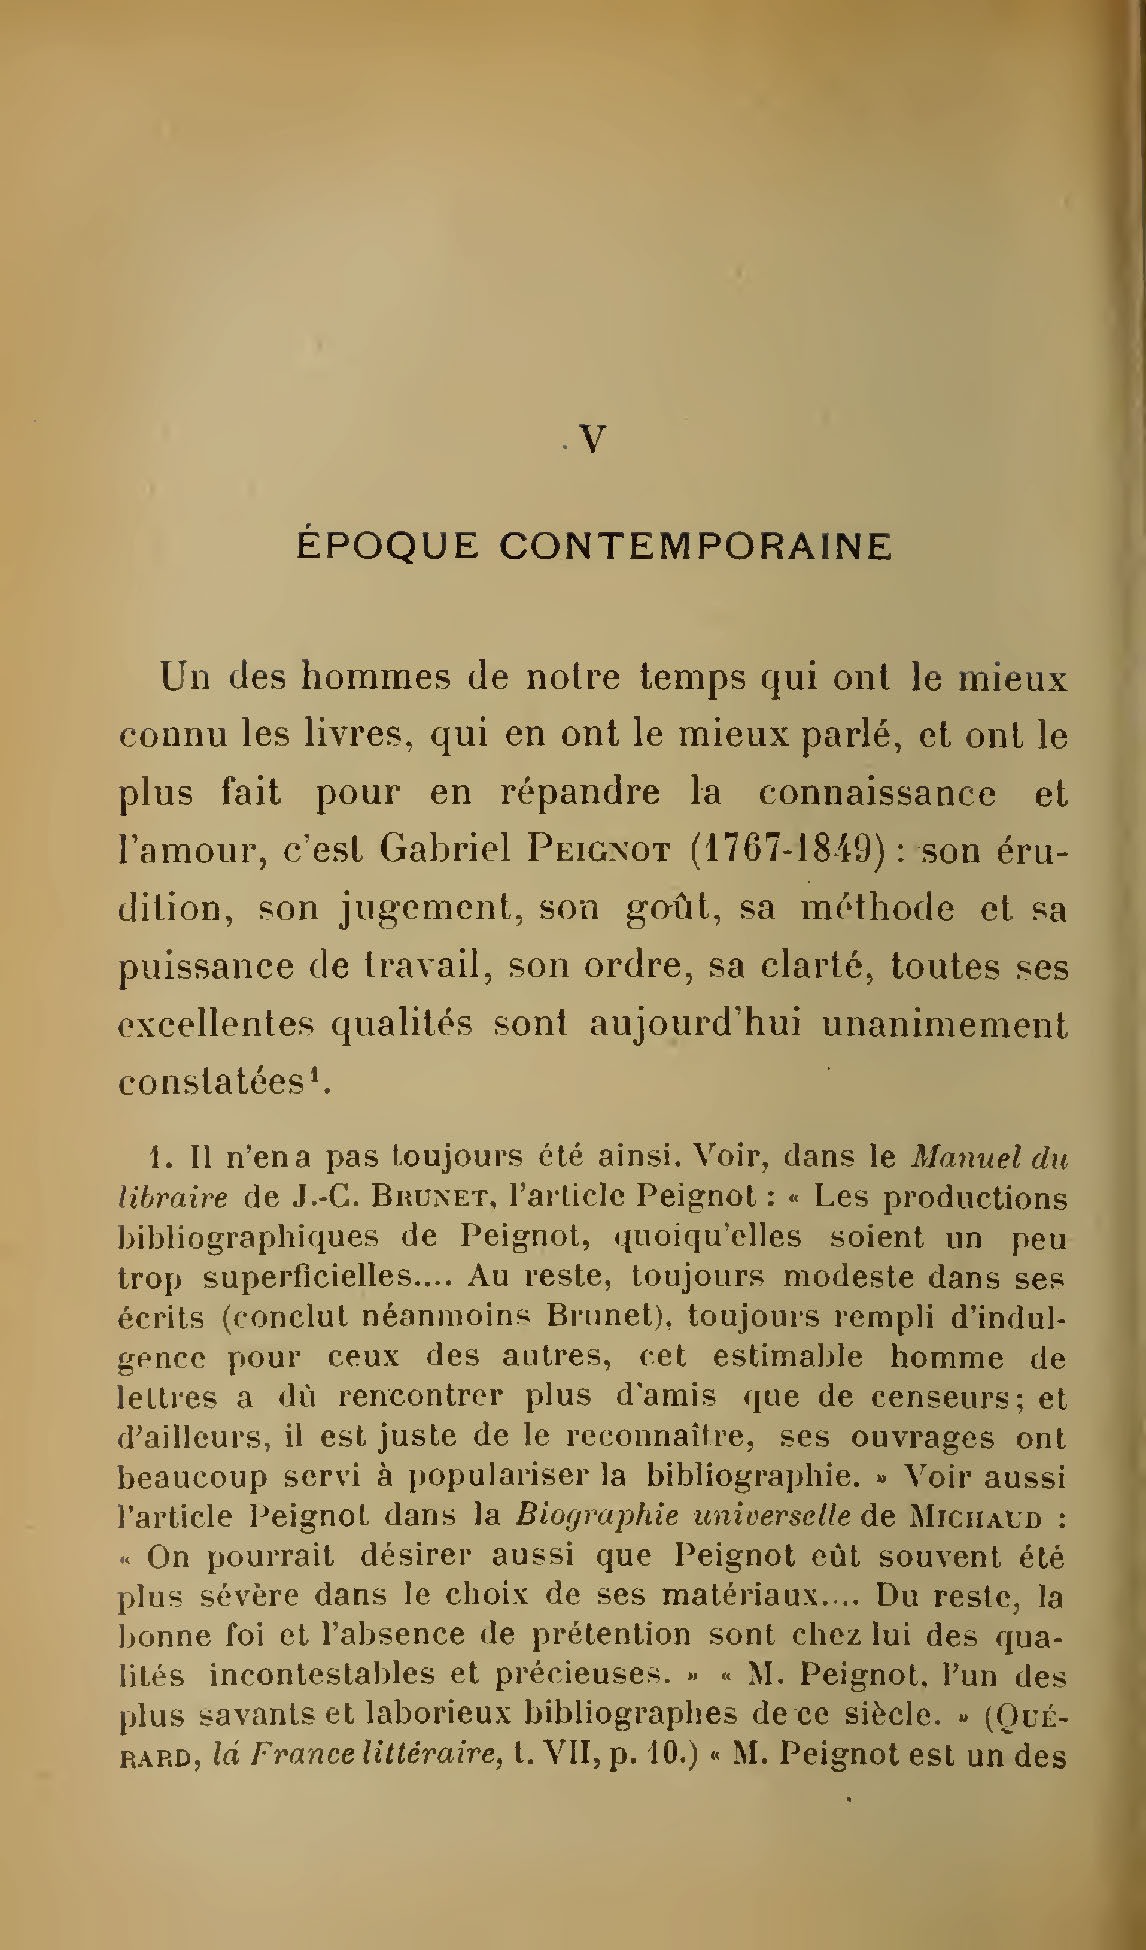 Albert Cim, Le Livre, t. I, p. 176.